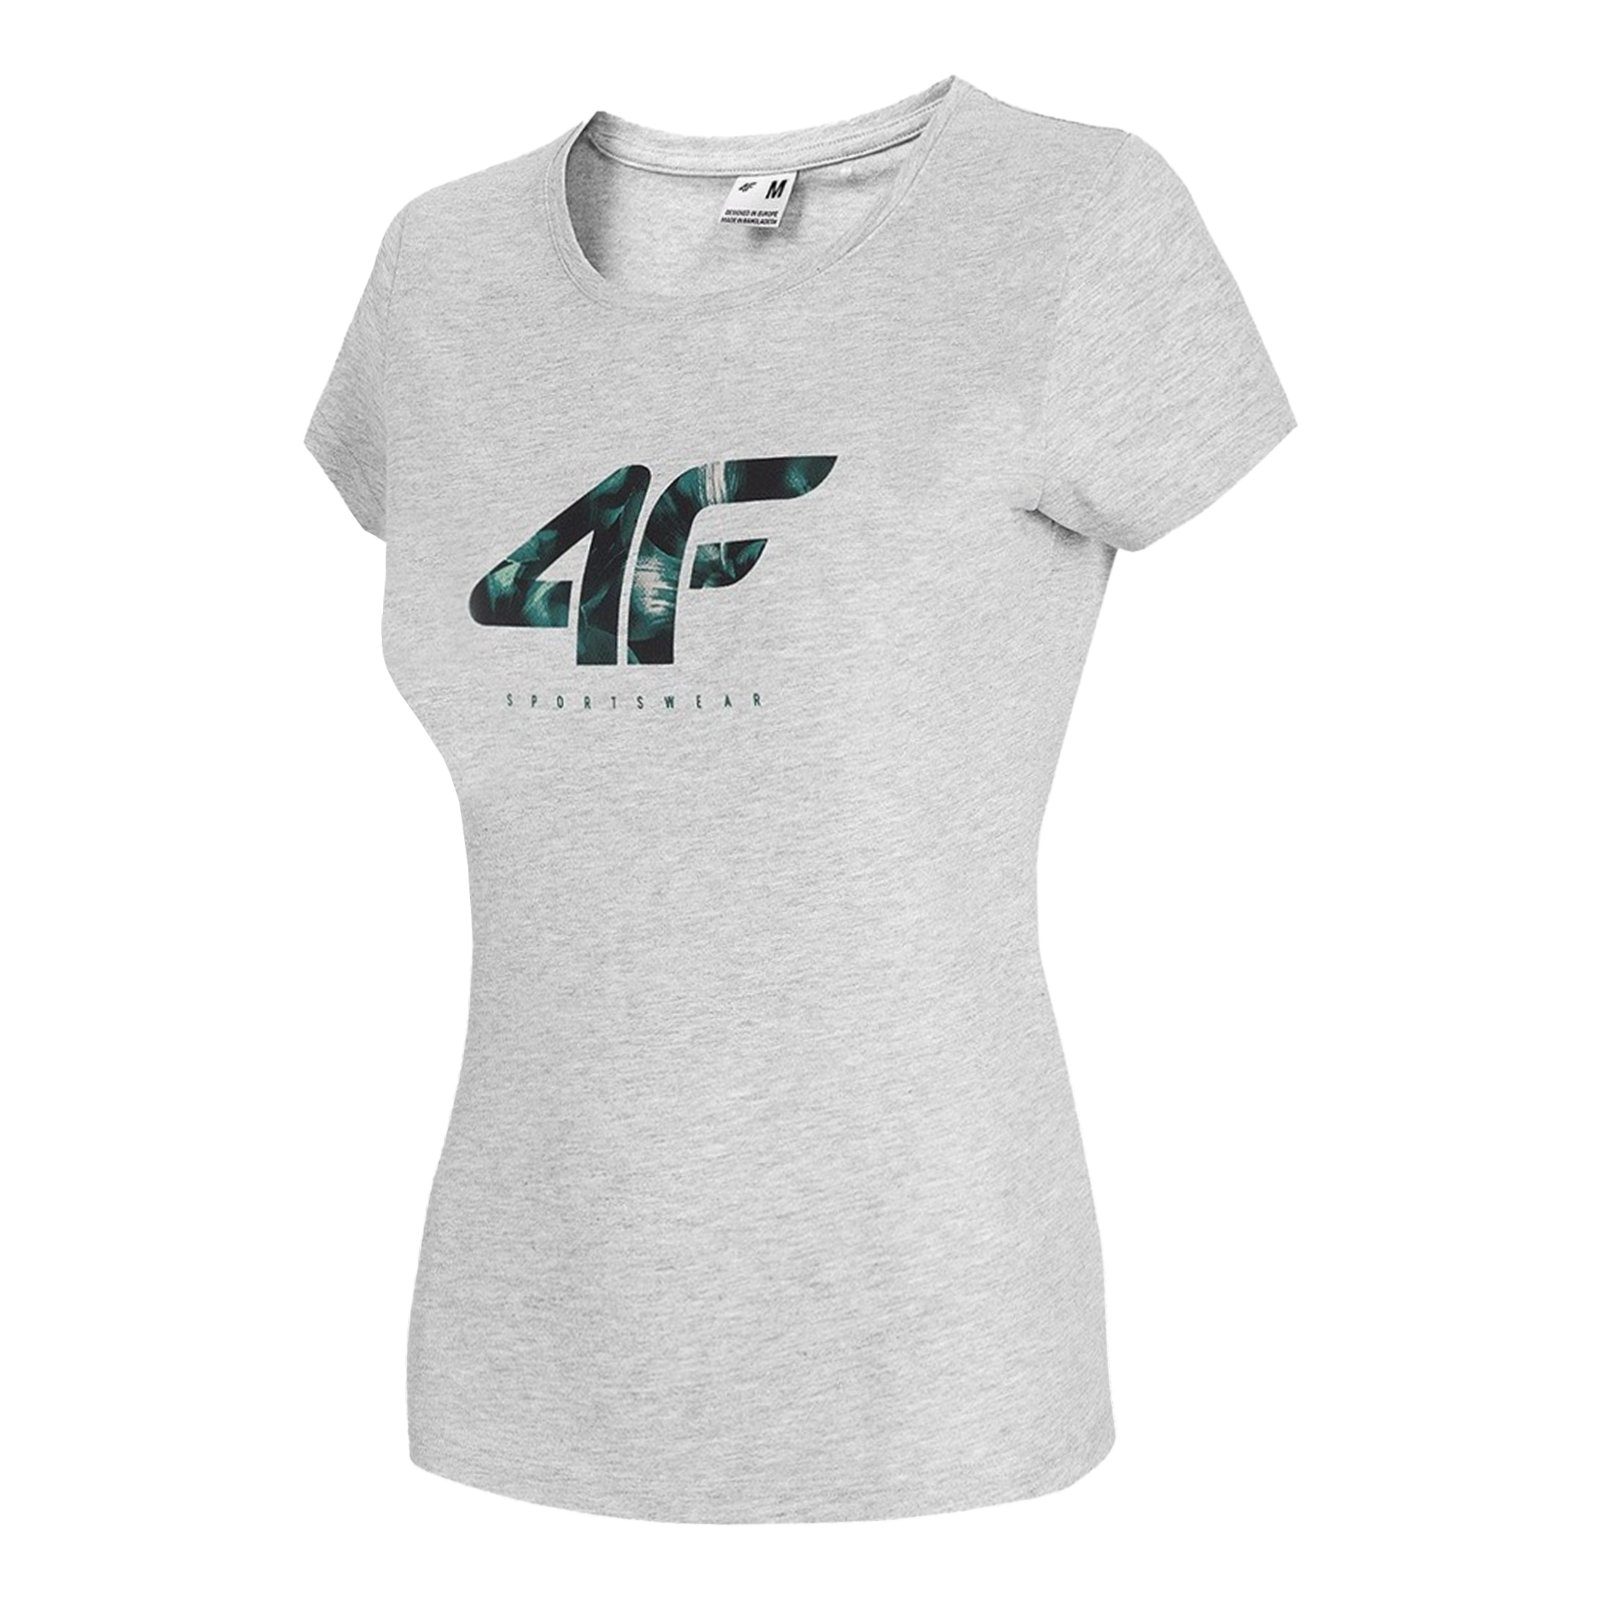 4F T-Shirt Regular Fit mit Logo 4F großem